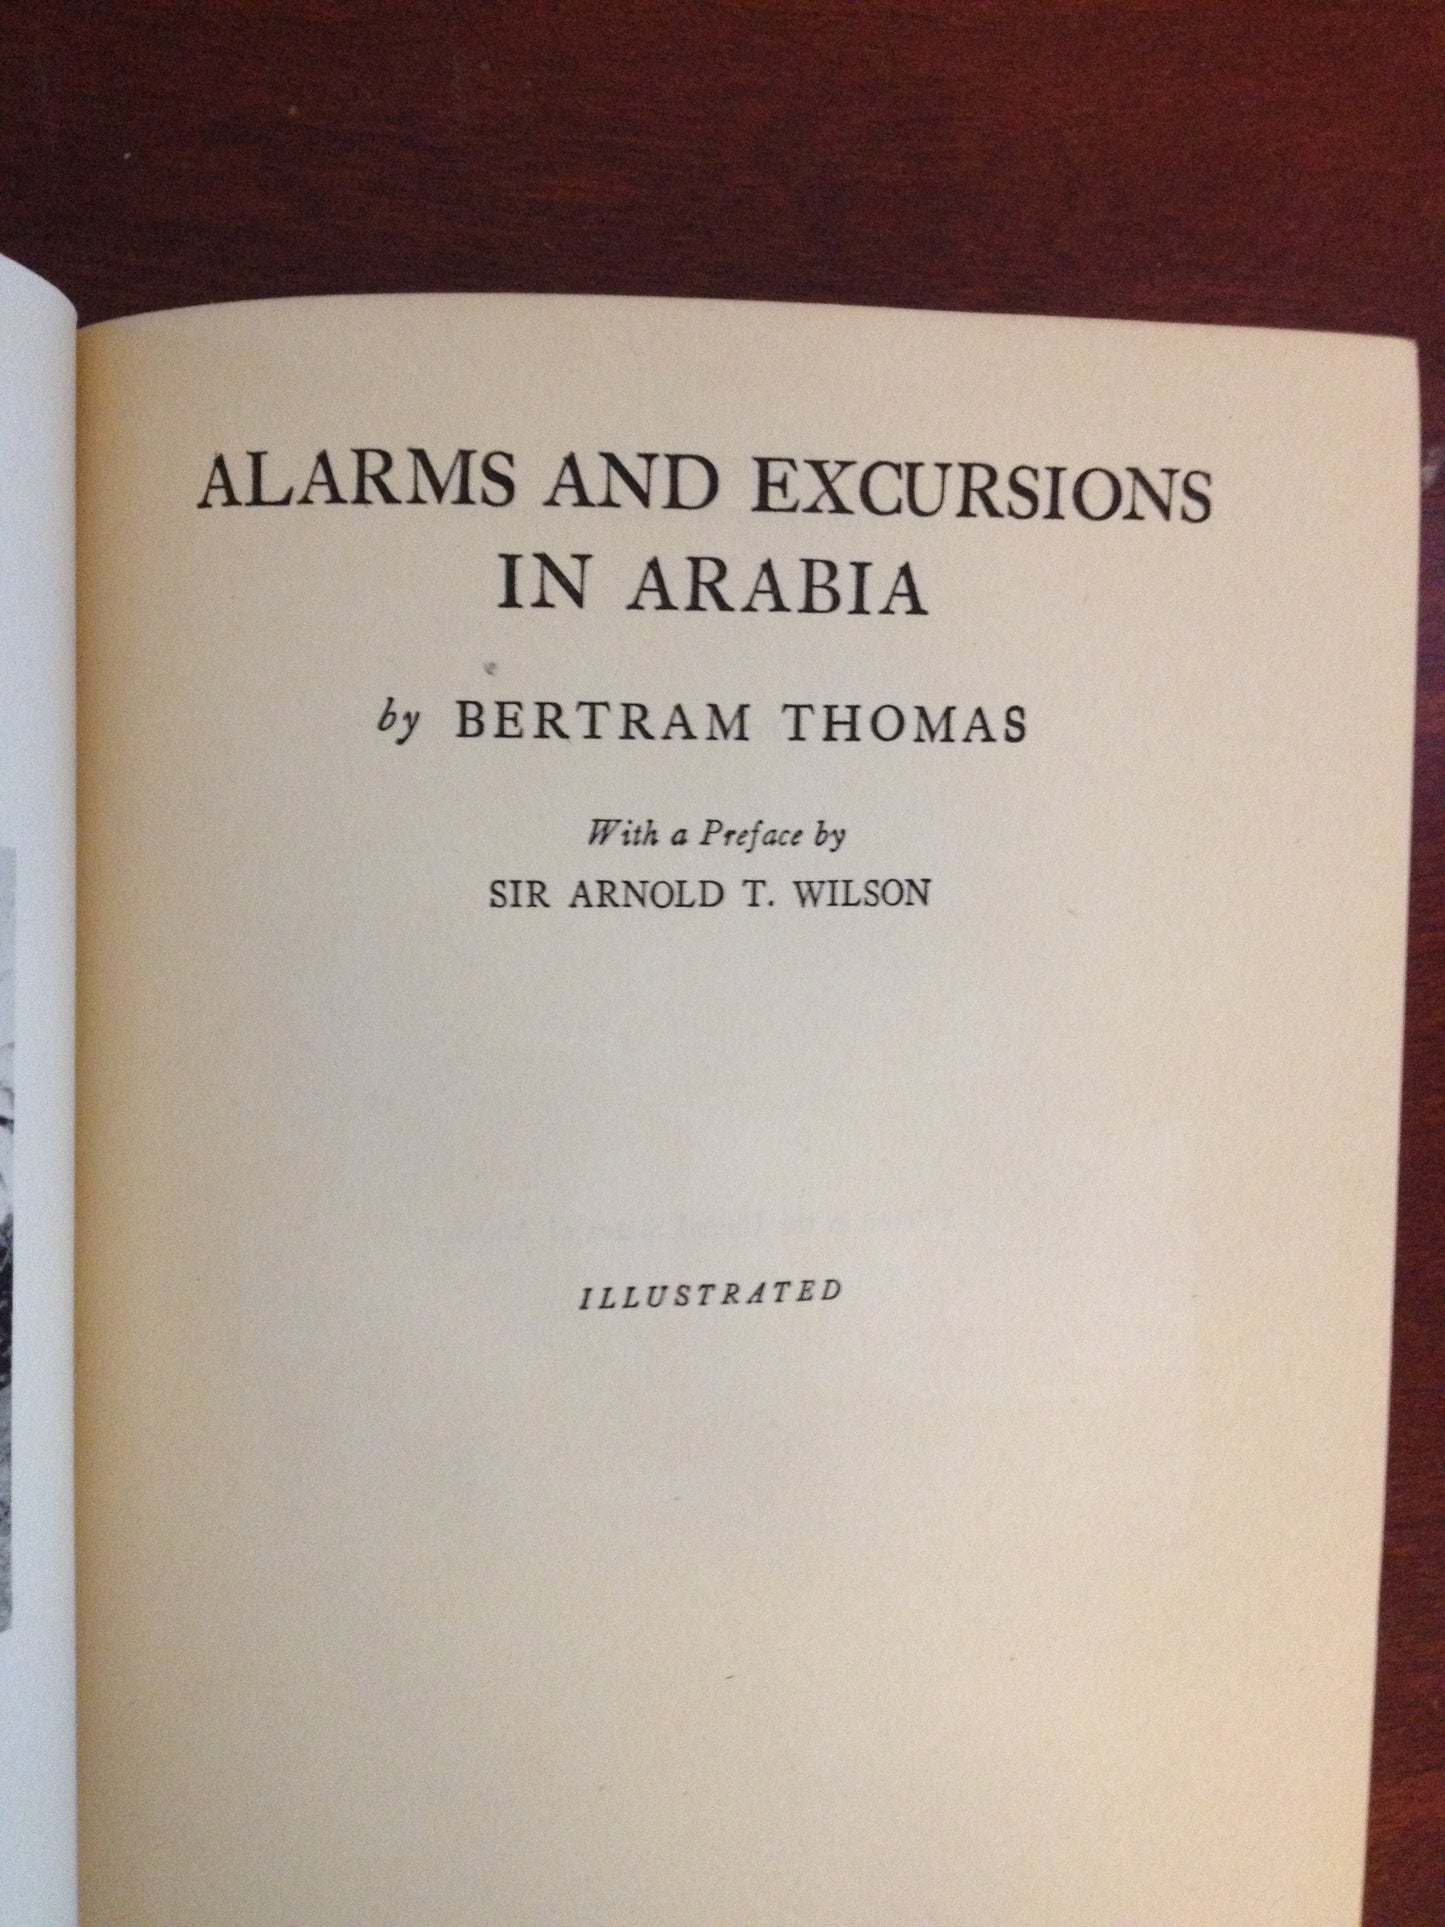 ALARMS AND EXCURSIONS IN ARABIA  - BERTRAM THOMAS